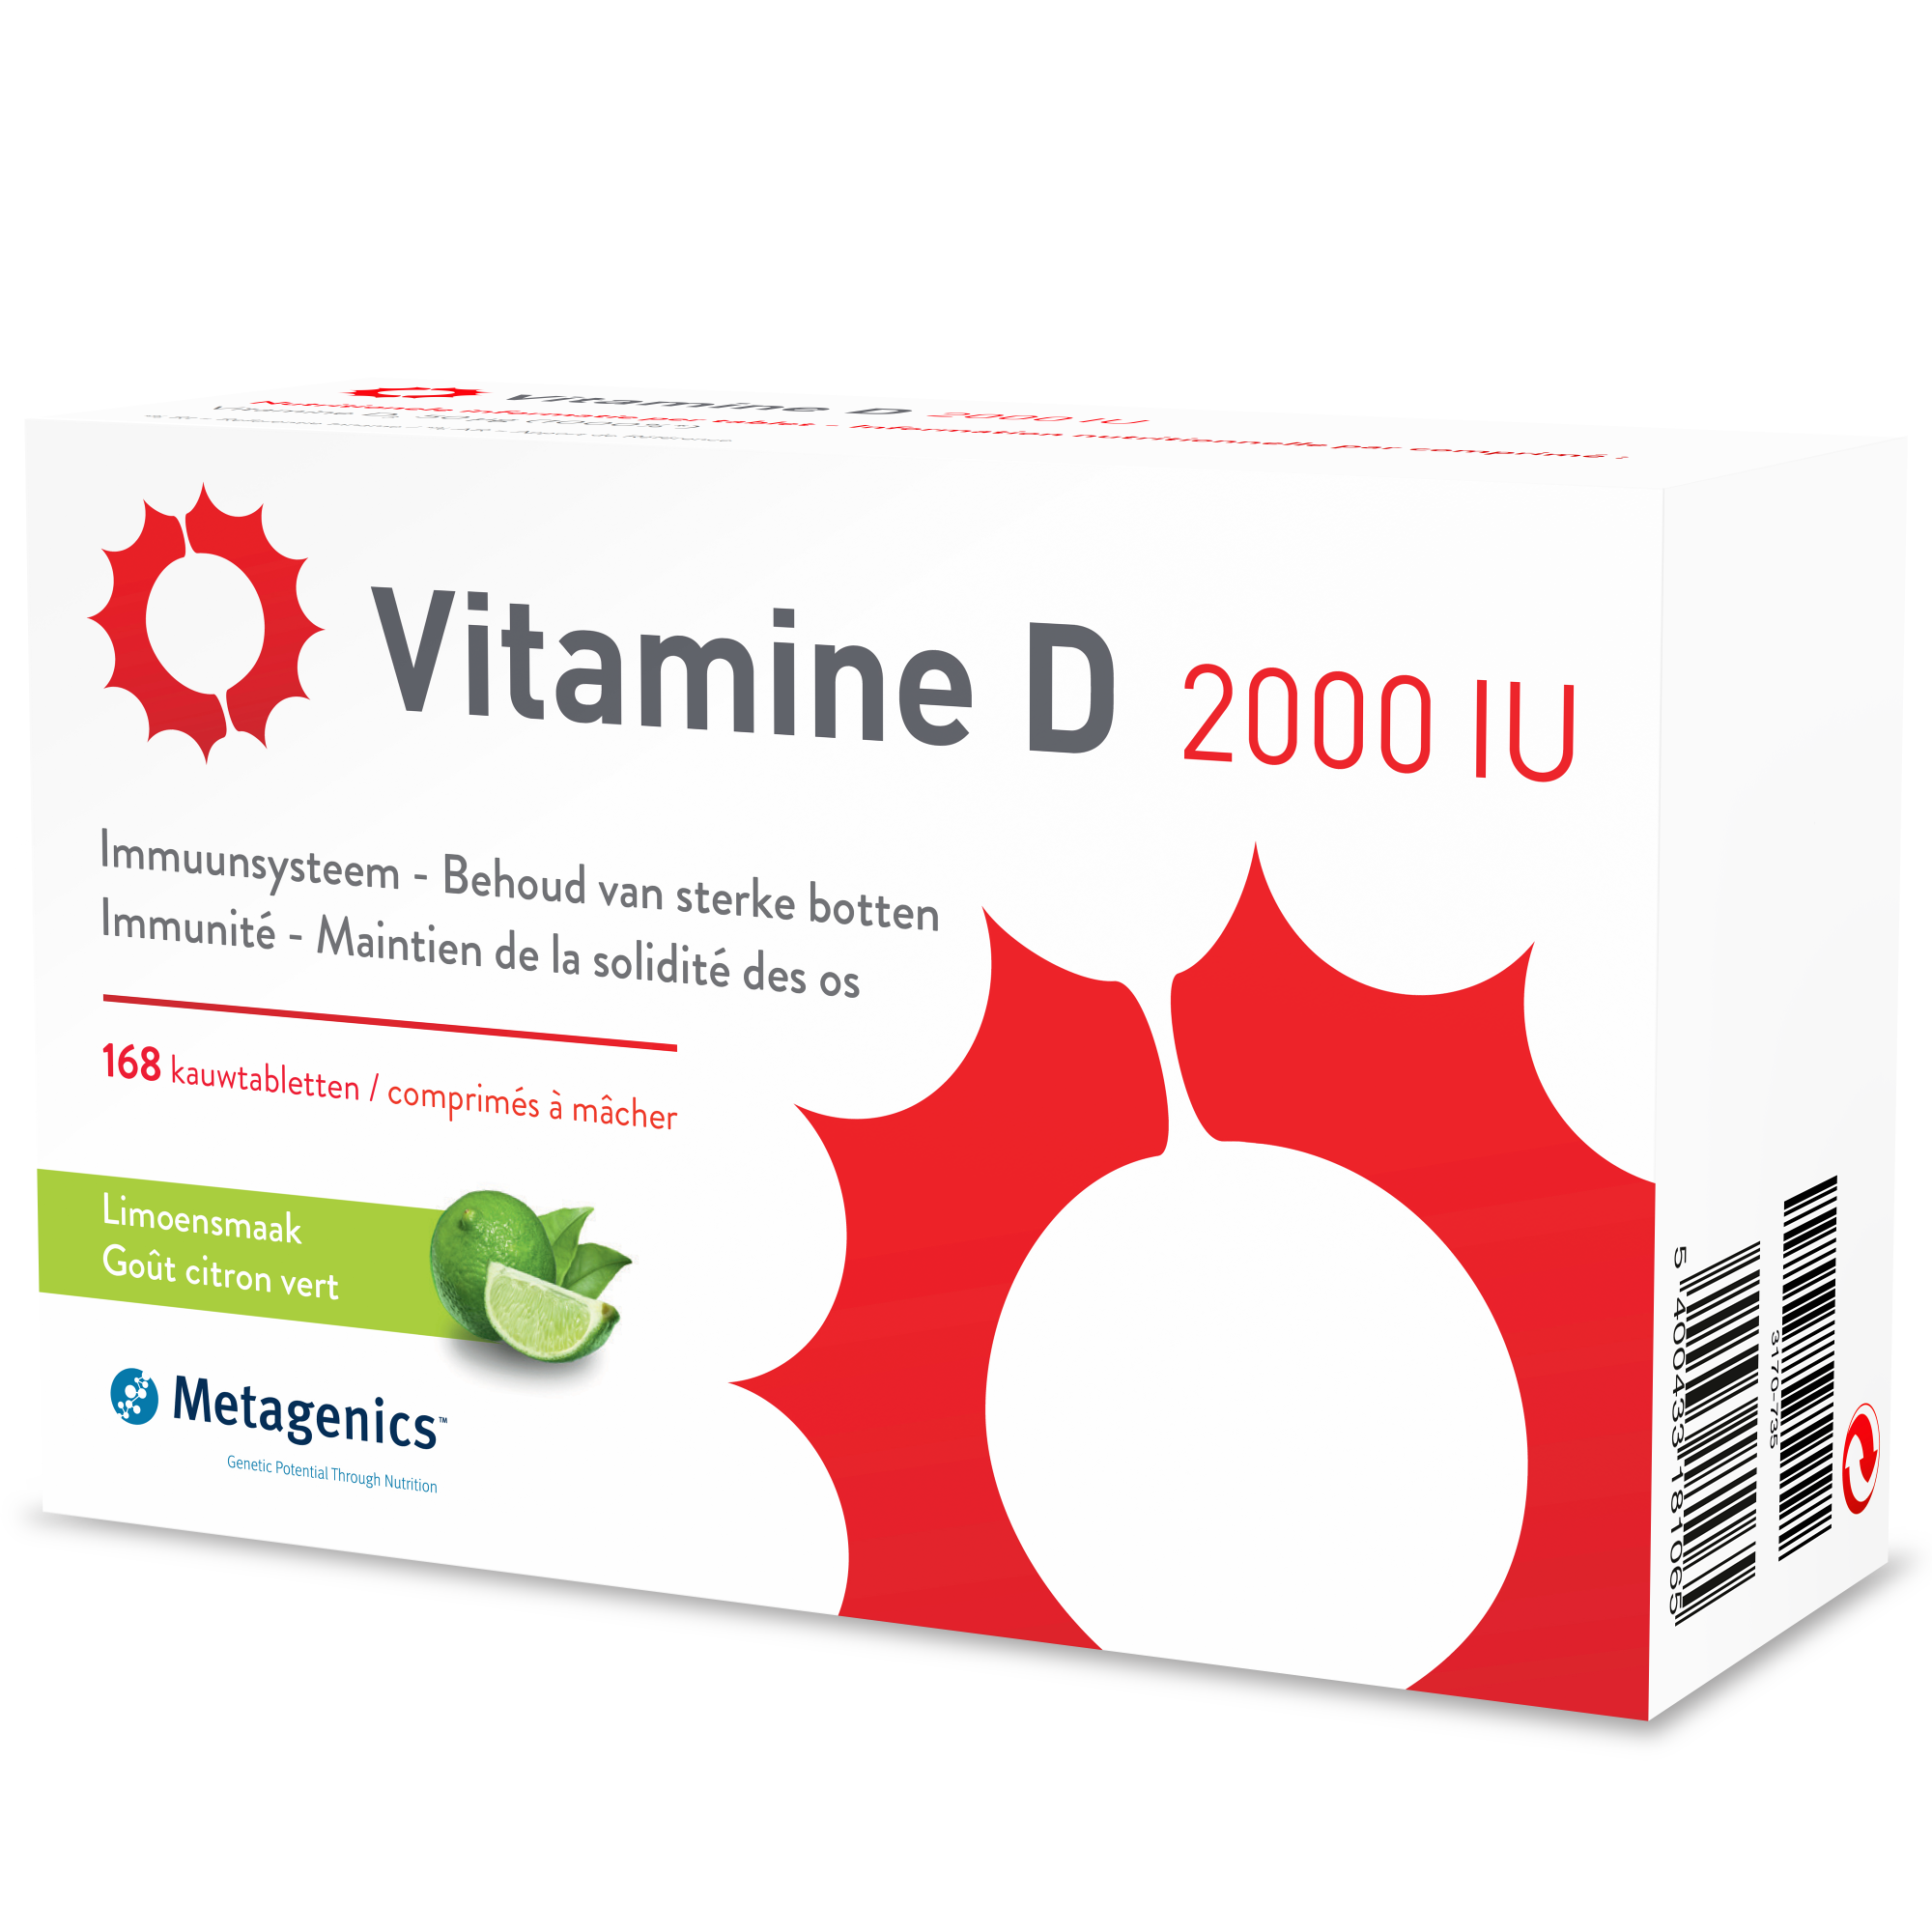 Vitamine D 2000 IU